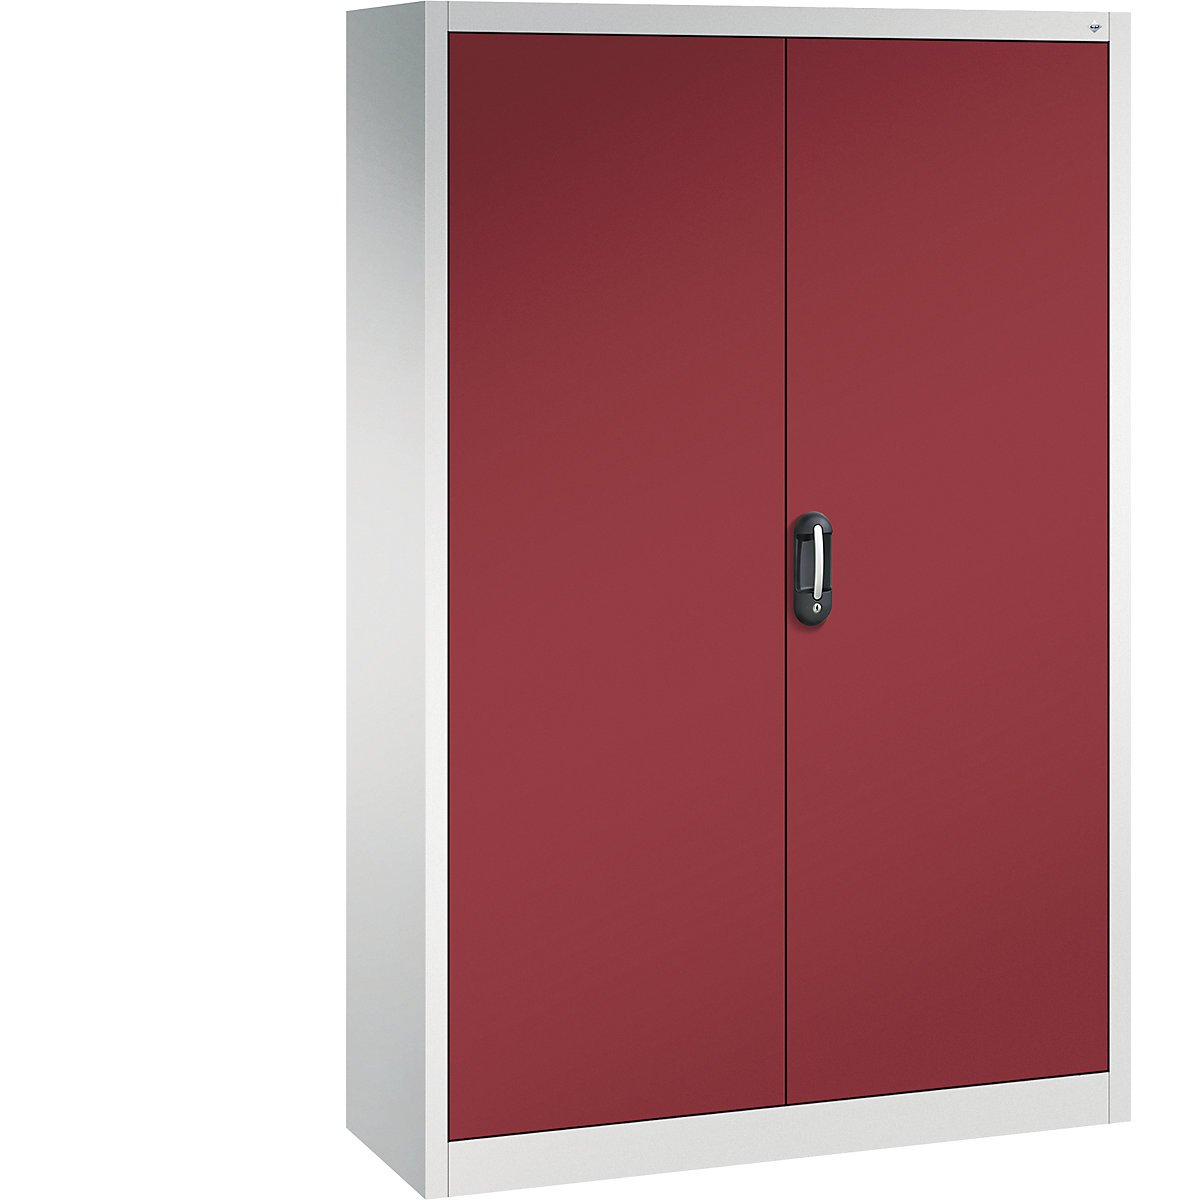 ACURADO universal cupboard – C+P, WxD 1200 x 400 mm, light grey / ruby red-19